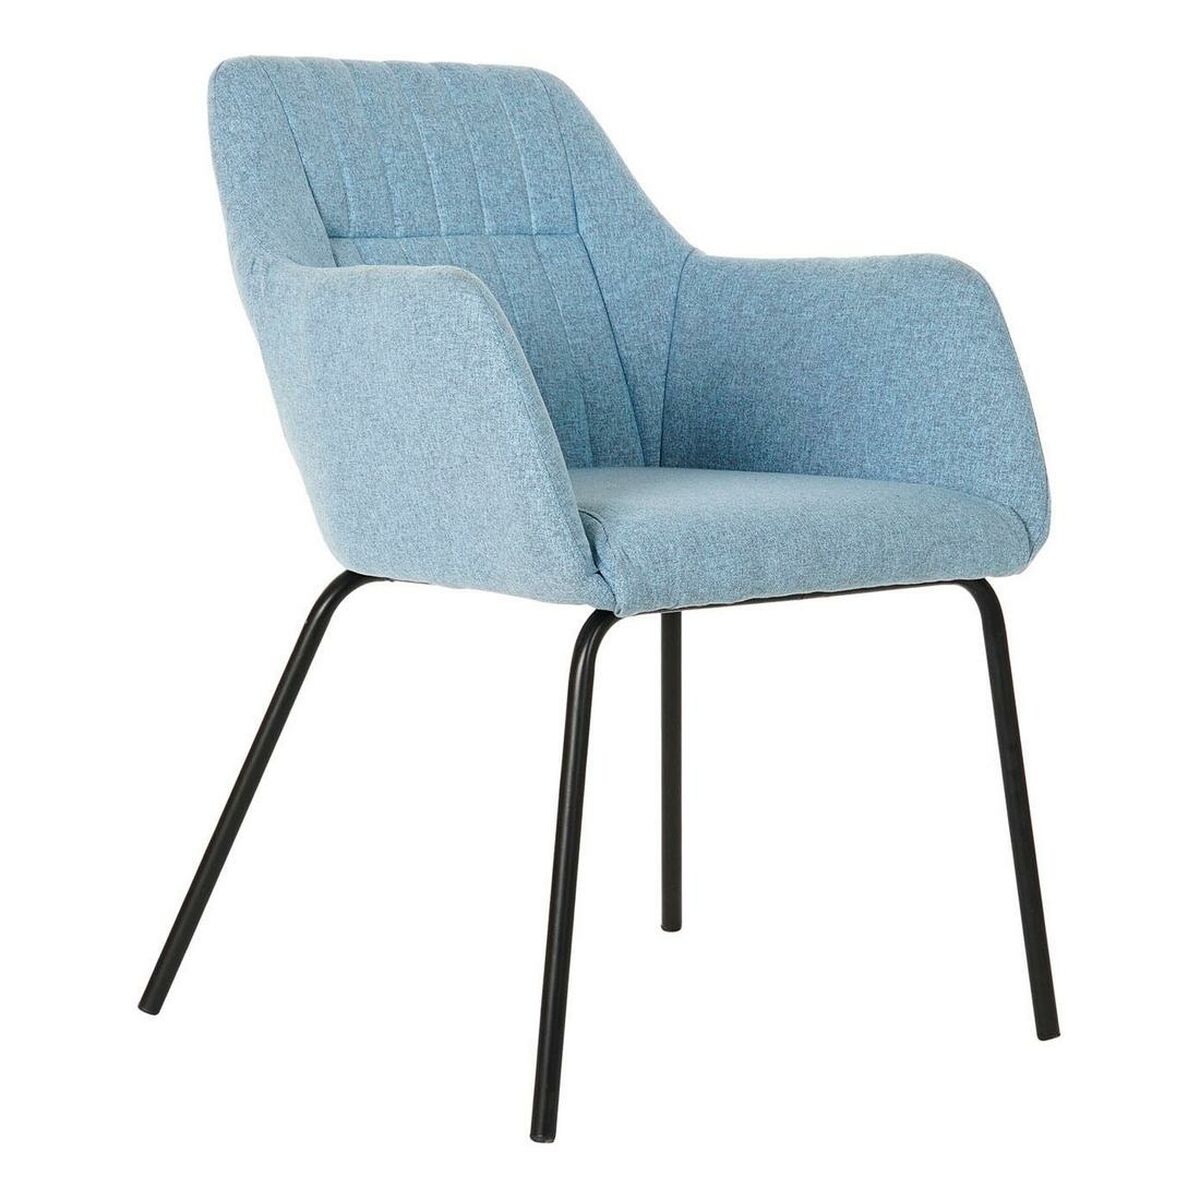 Sky Blue Chair with Black Metal Legs (58 x 59 x 76 cm)